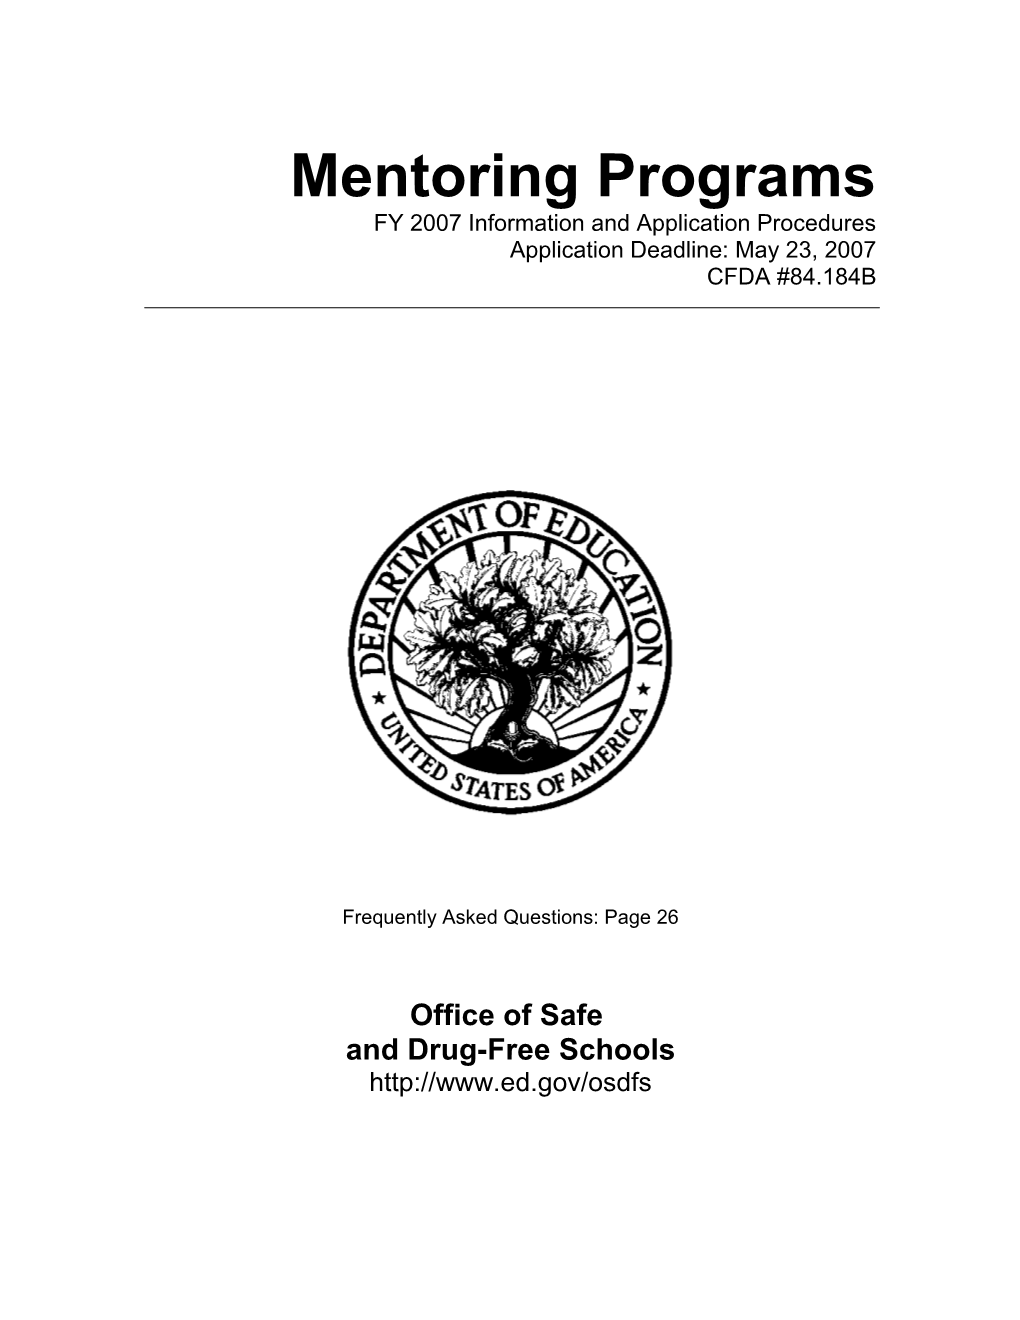 Mentoring Programs Grant Application (MS WORD)